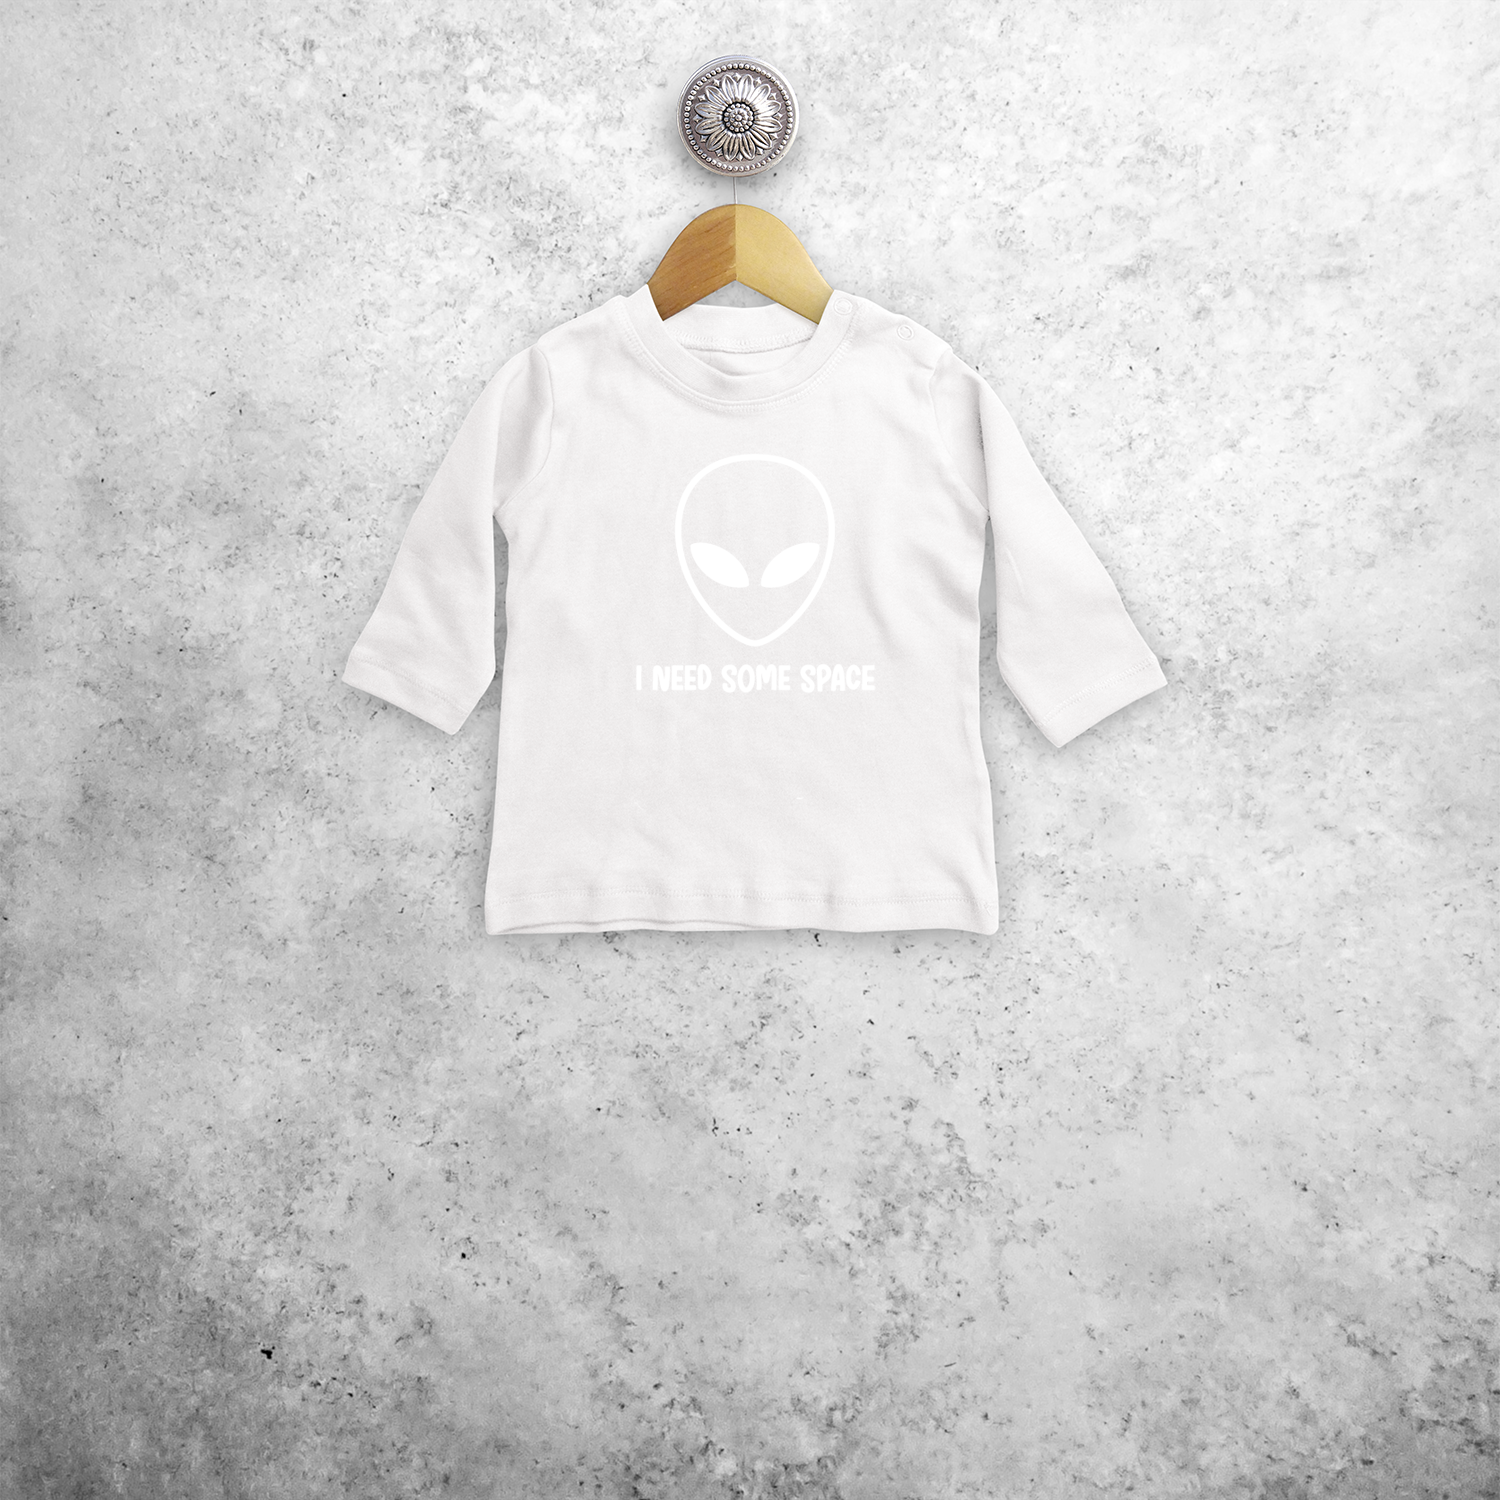 'I need some space' magic baby longsleeve shirt